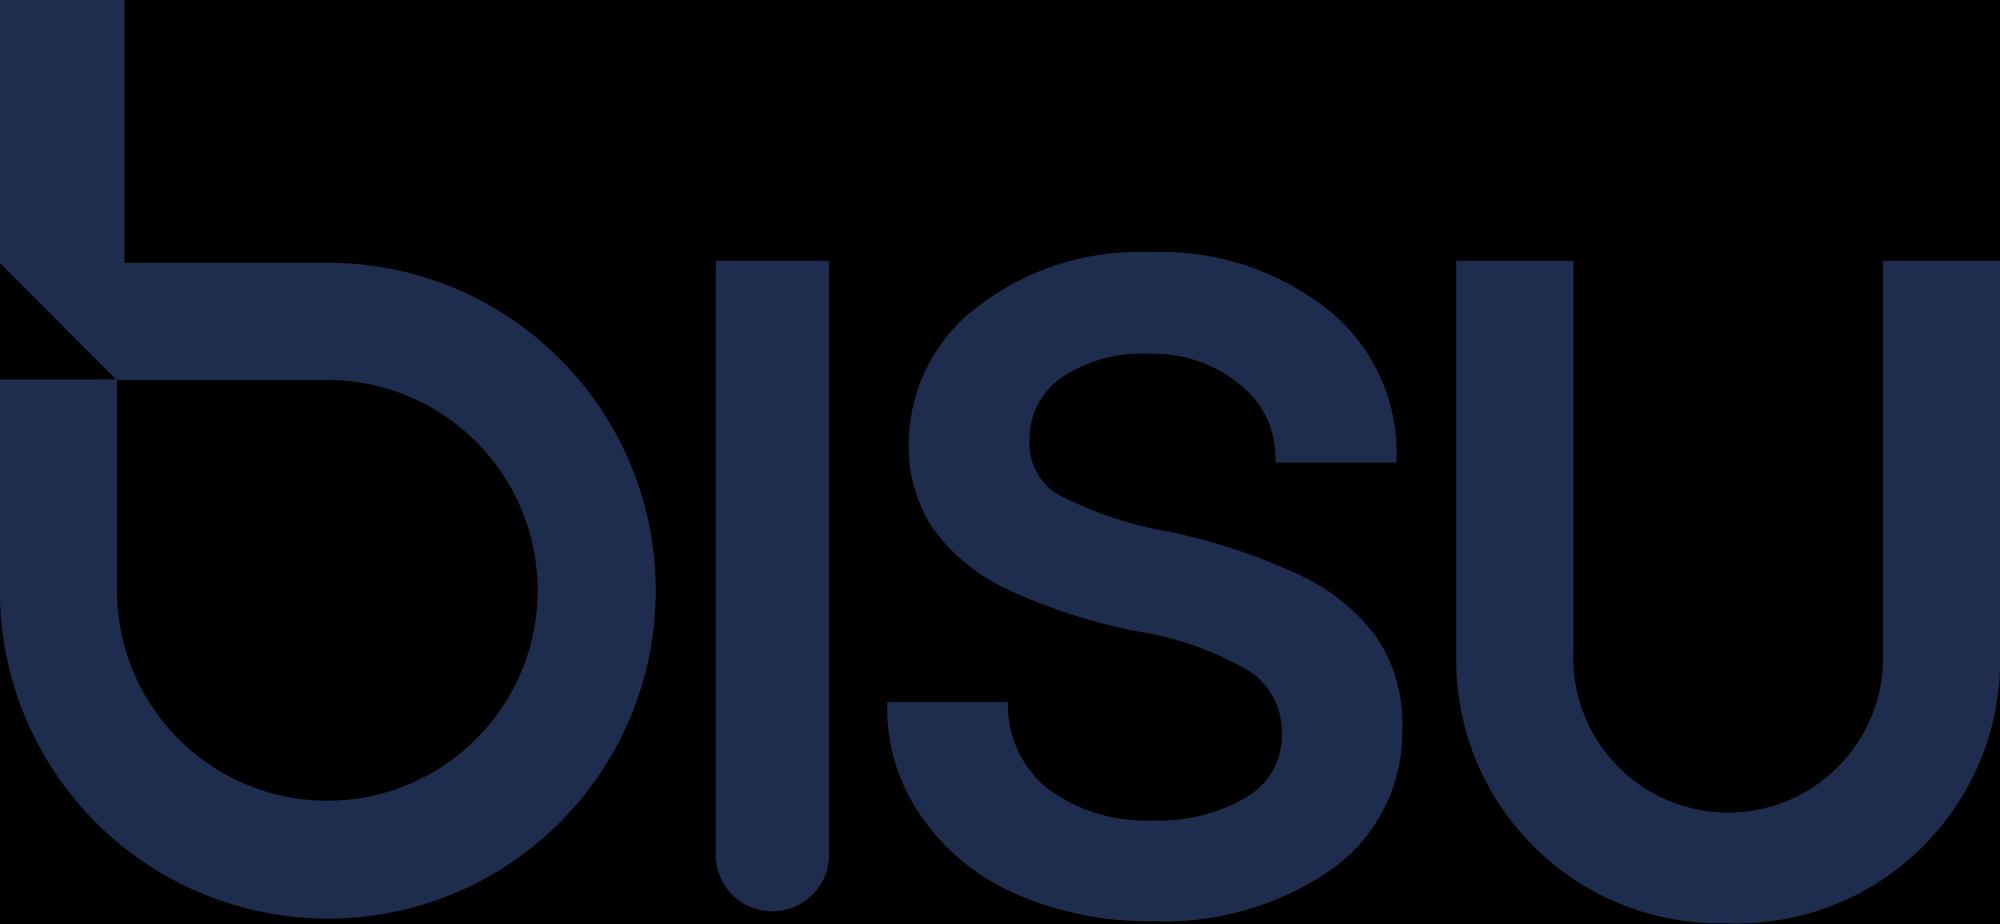 Bisu (Bisu)_logo